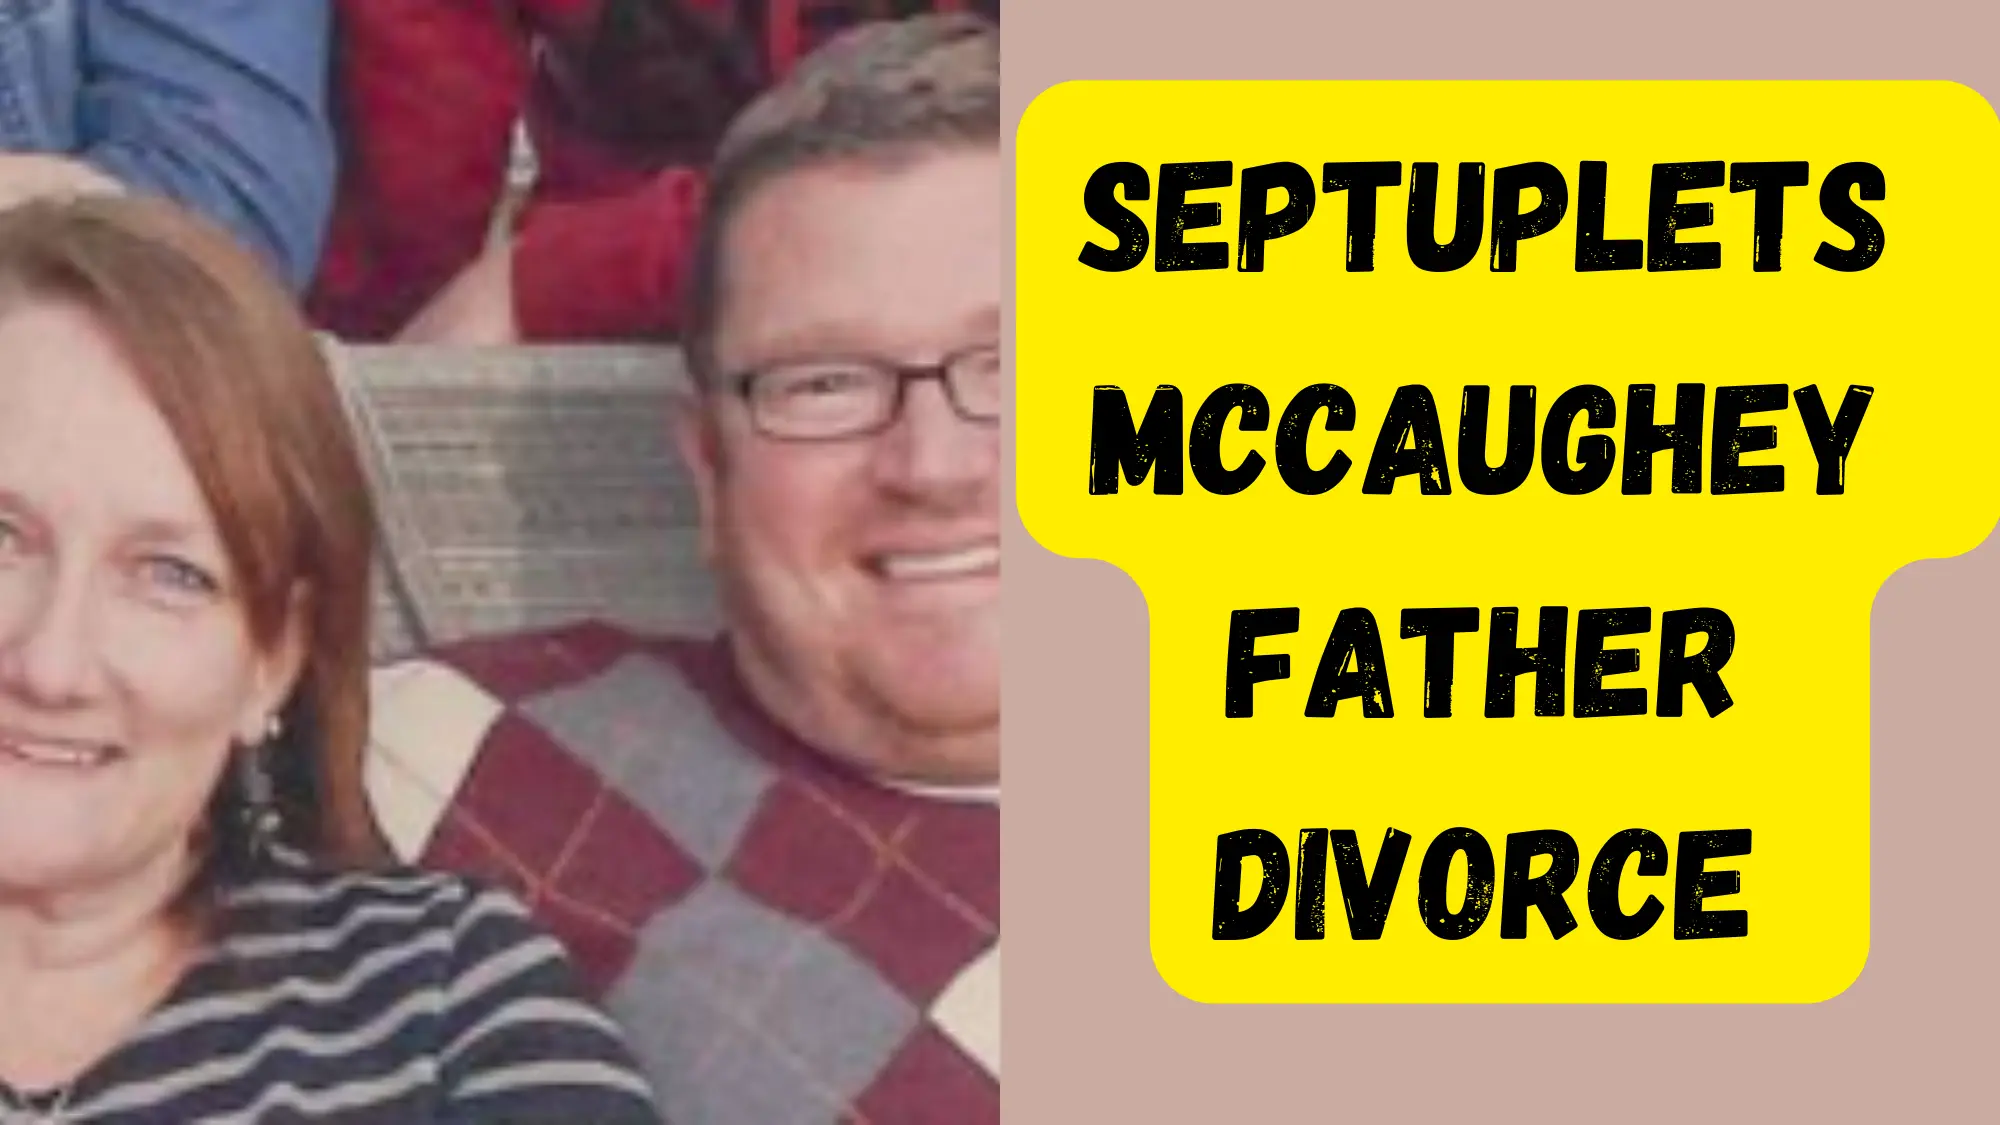 Septuplets McCaughey Father Divorce